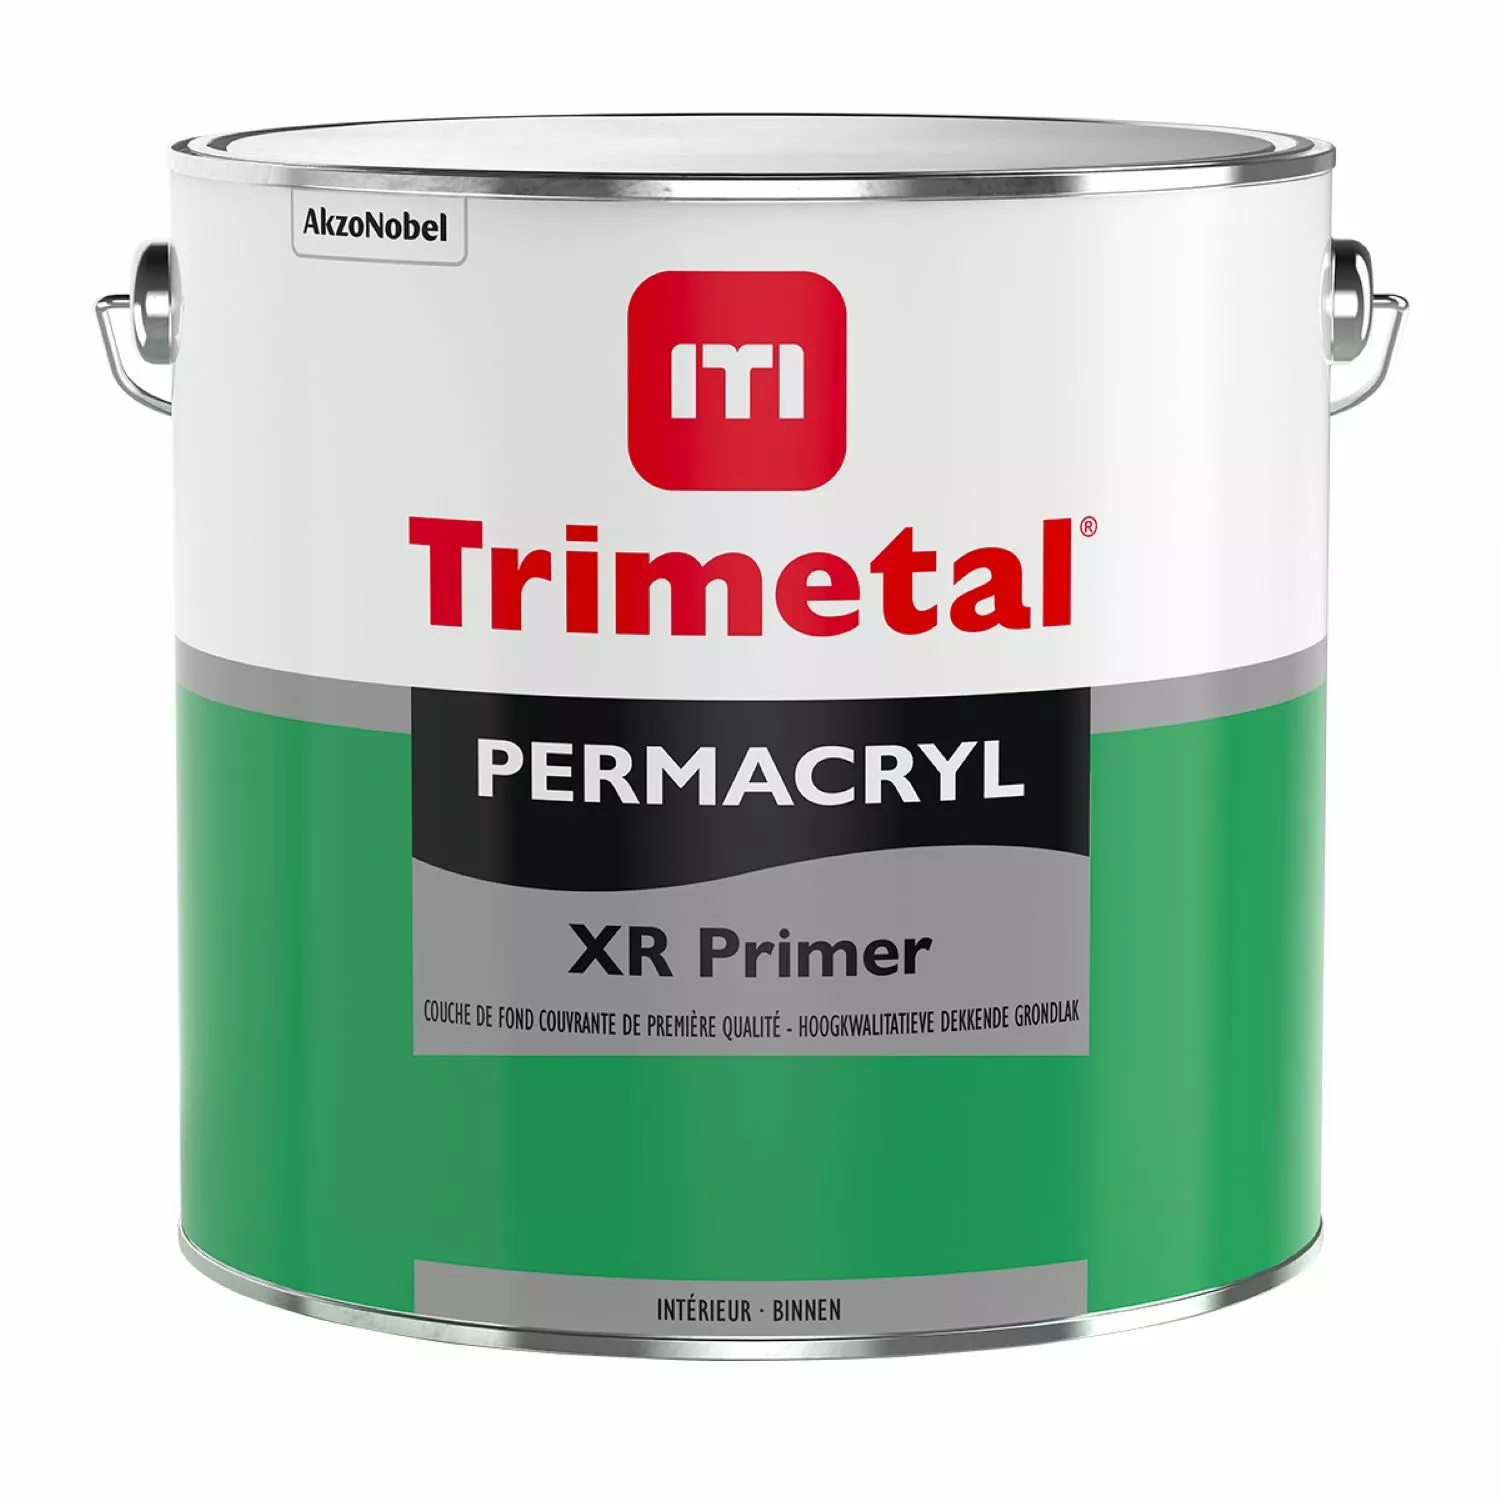 Trimetal Permacryl XR Primer grondlak - op kleur gemengd - 2,5L-image